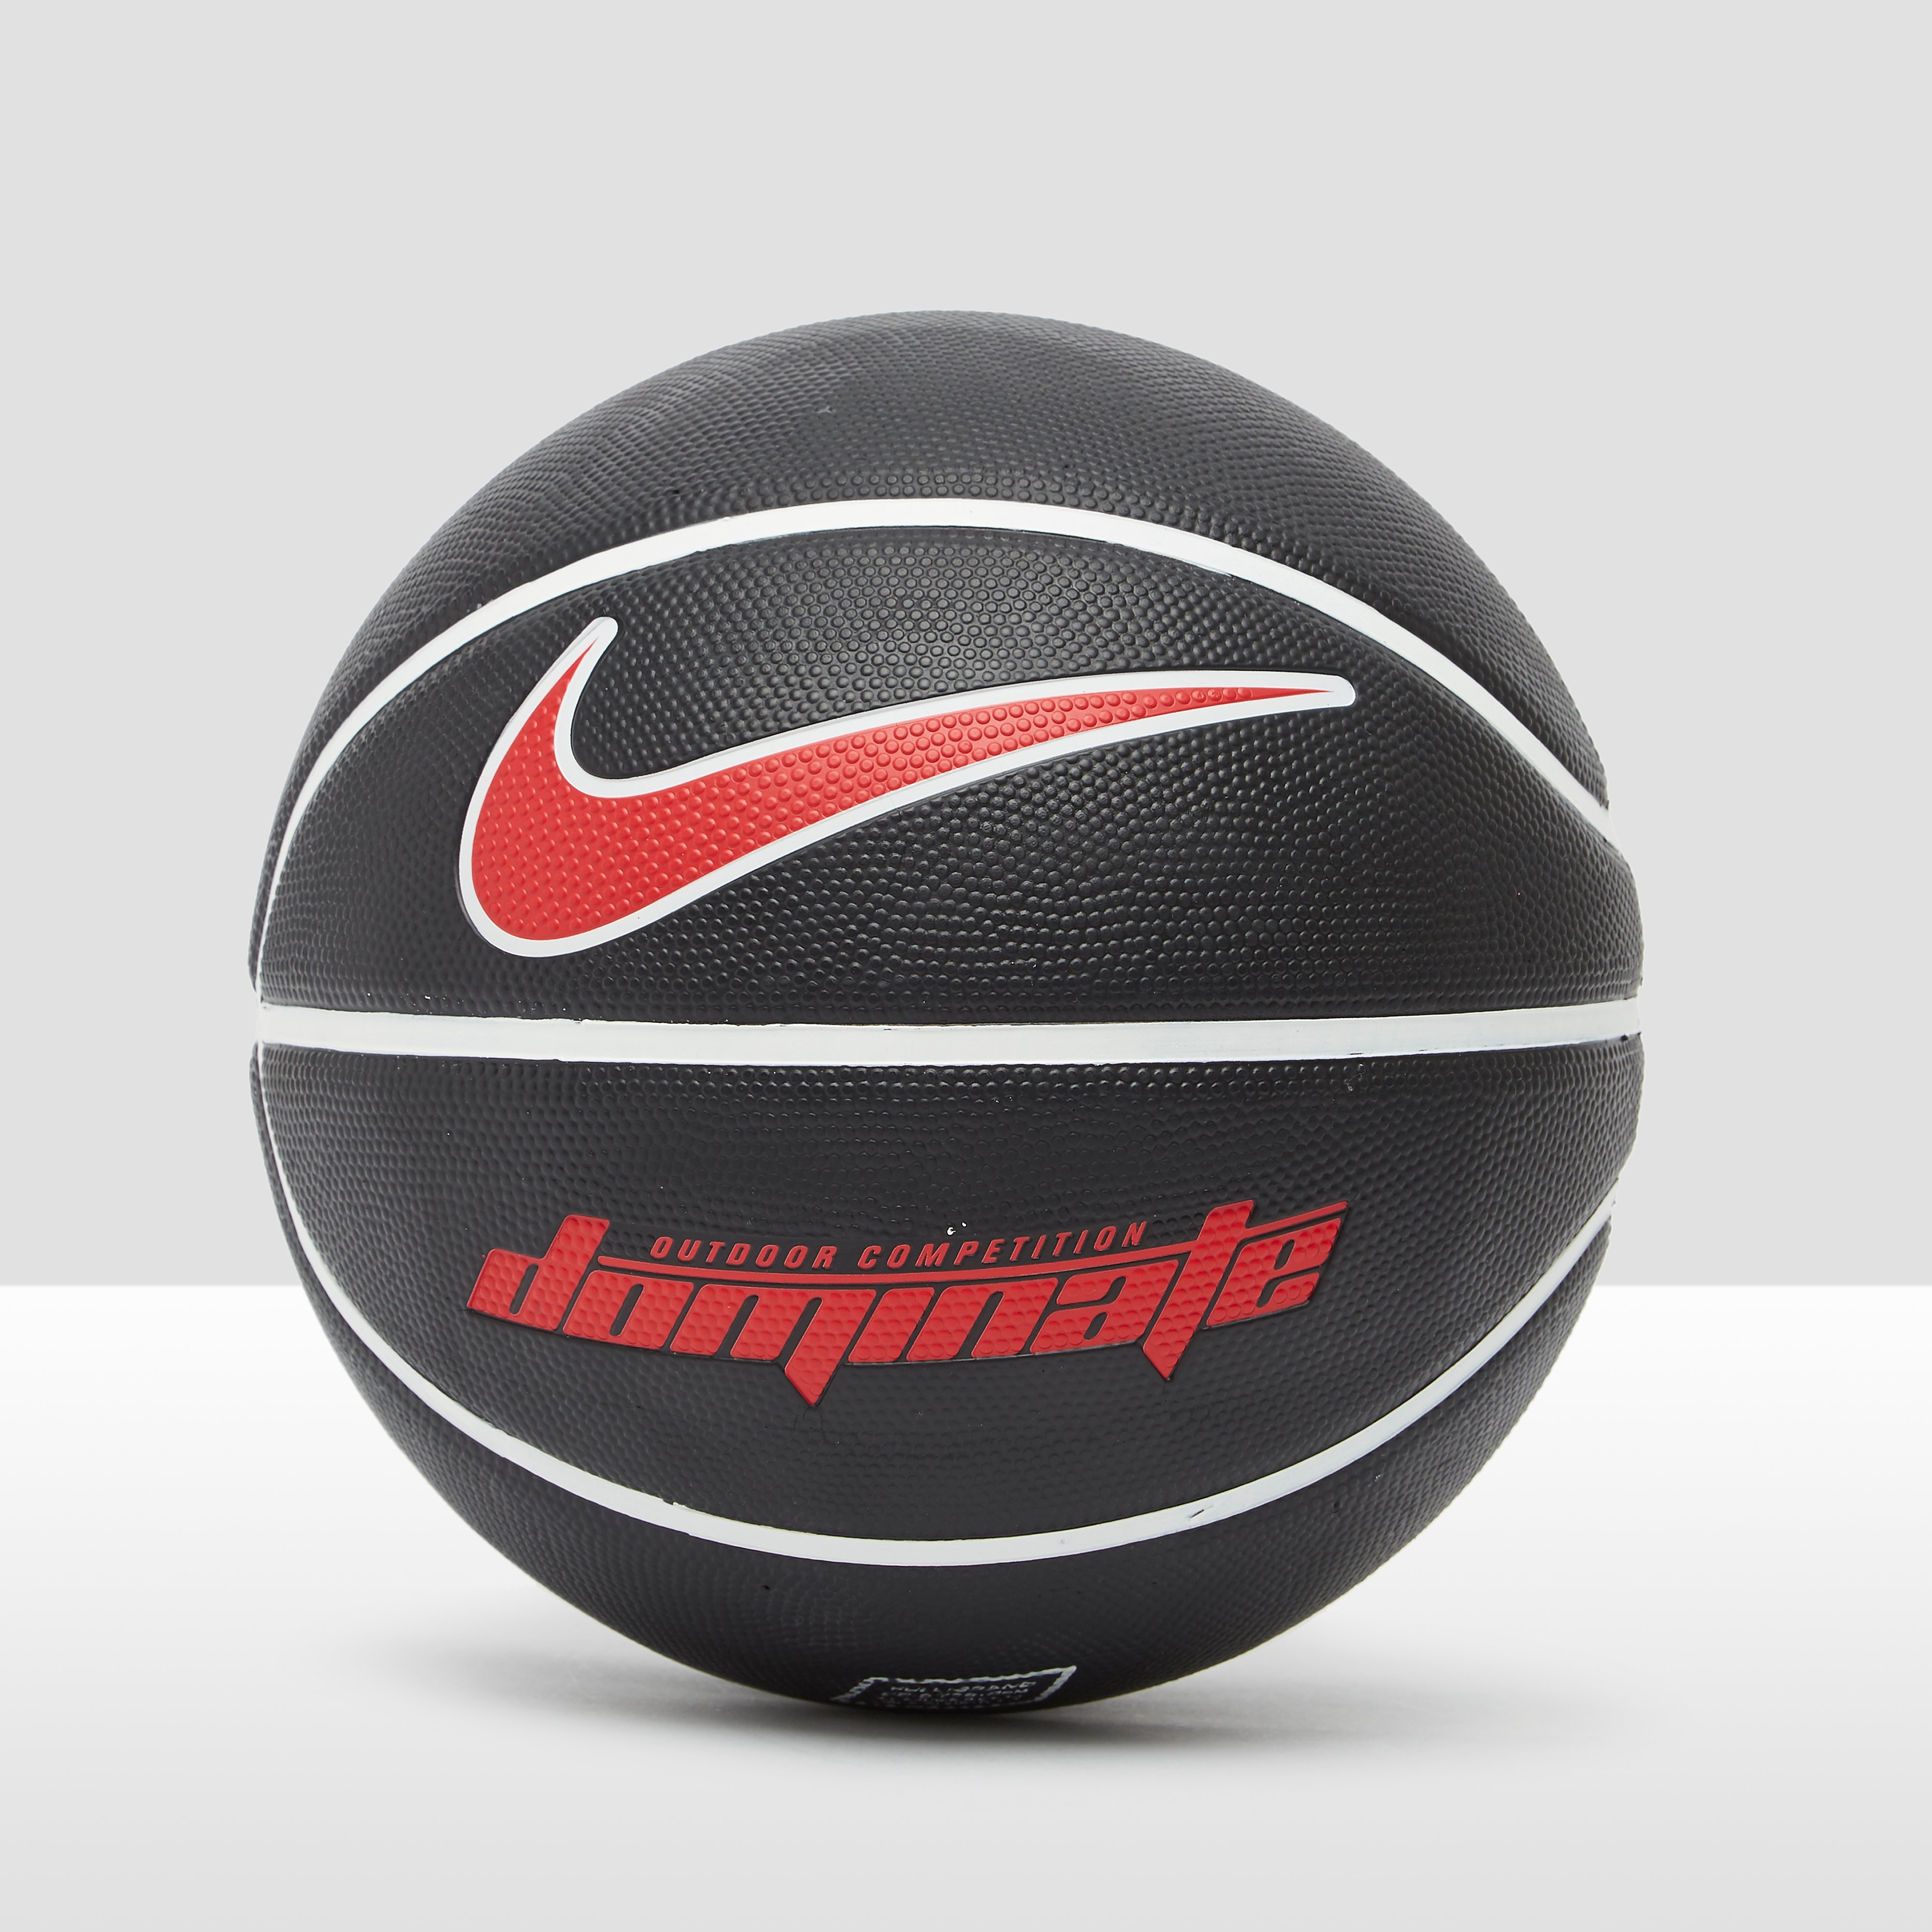 Nike dominate 8-panel basketbal zwart/rood